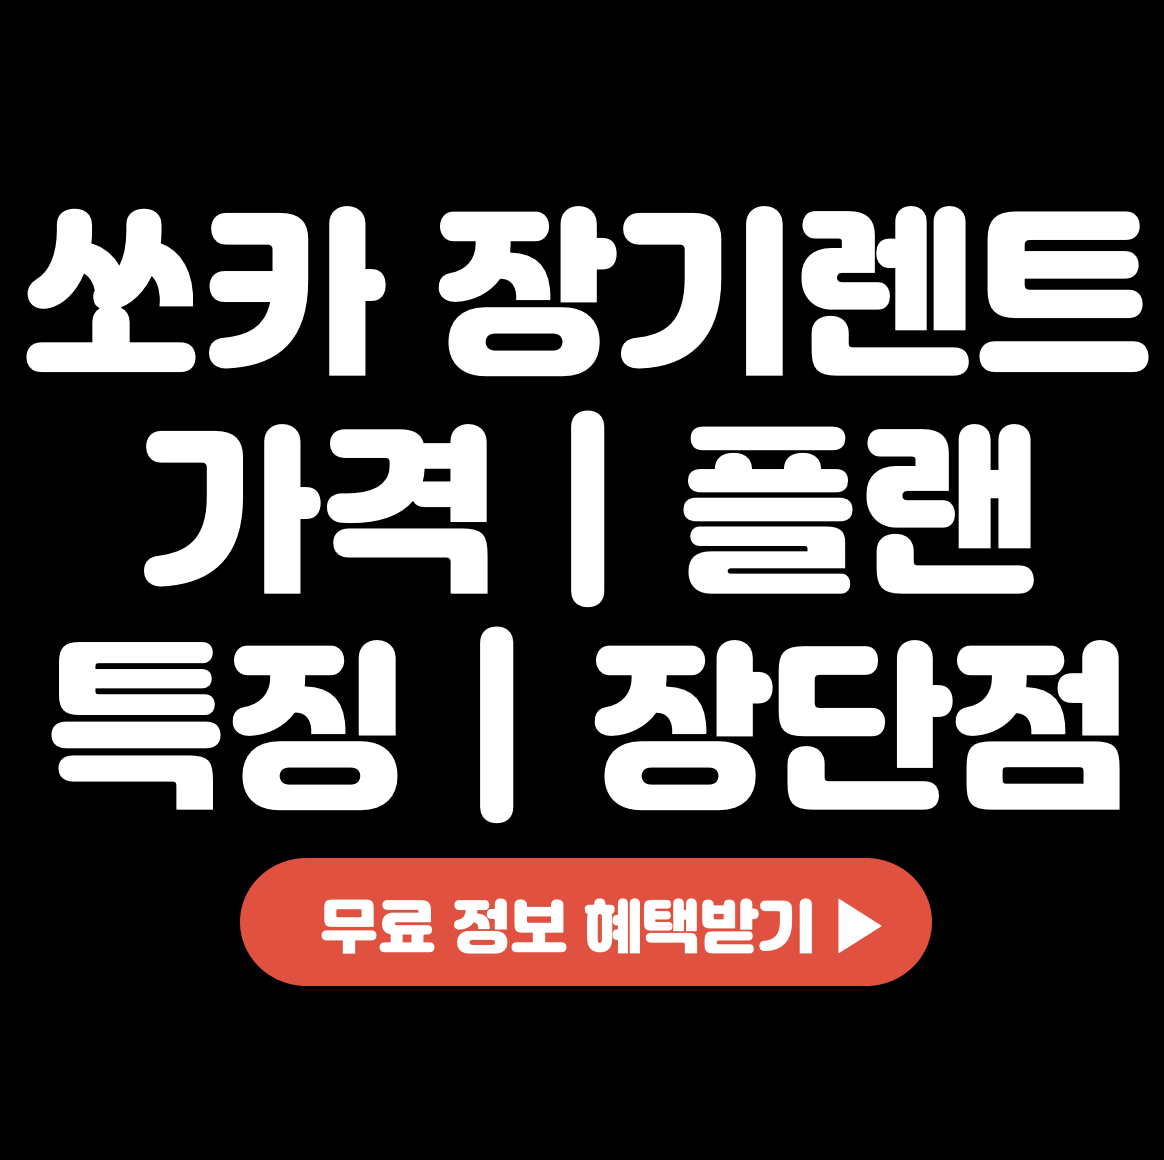 This is 쏘카 장기렌트 가격 &#124; 플랜 특징 &#124; 장단점 &#124; 한달 렌탈 비용 후기